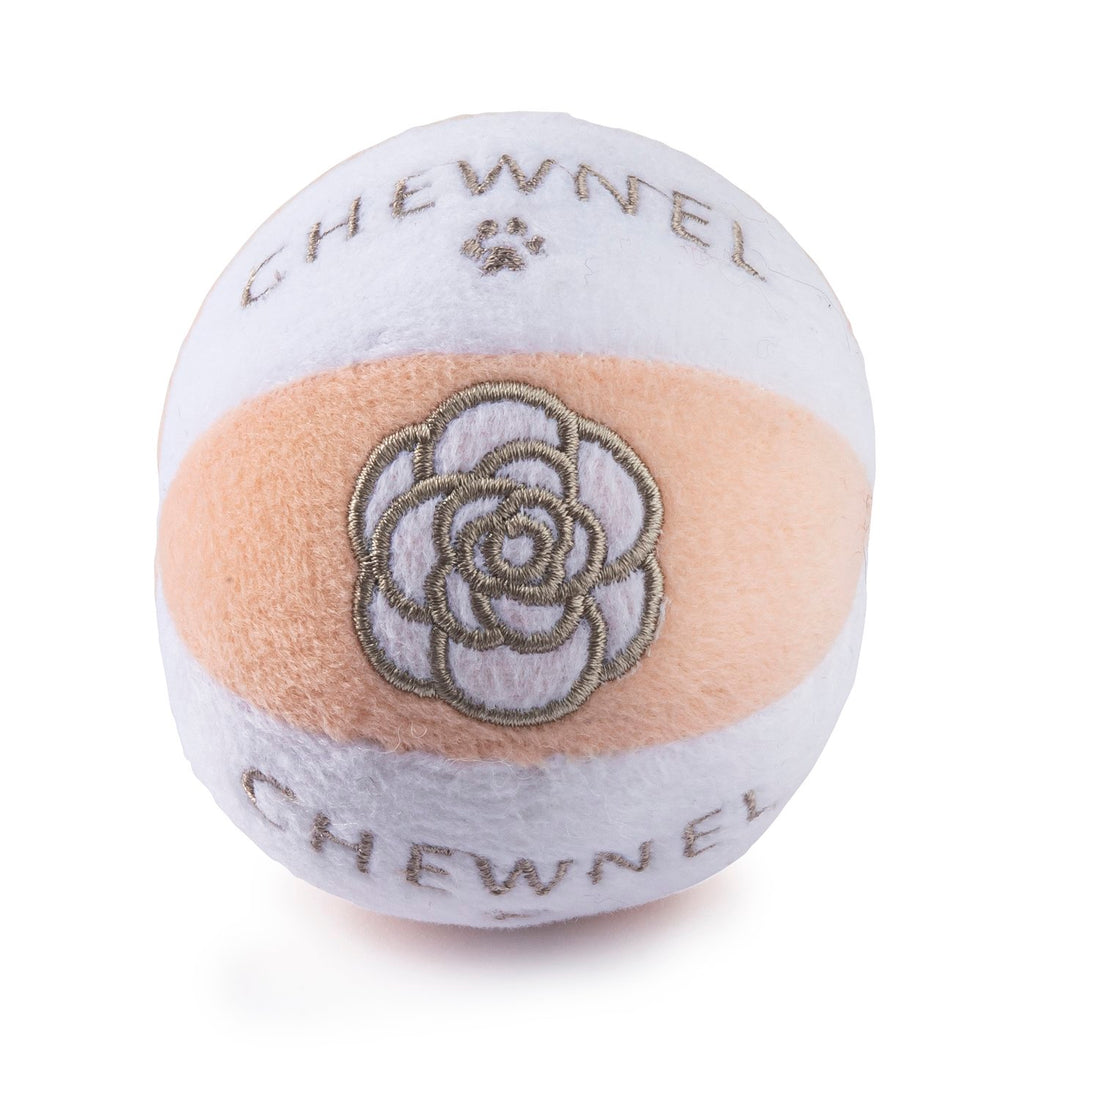 Chewnel Ball - Erröten